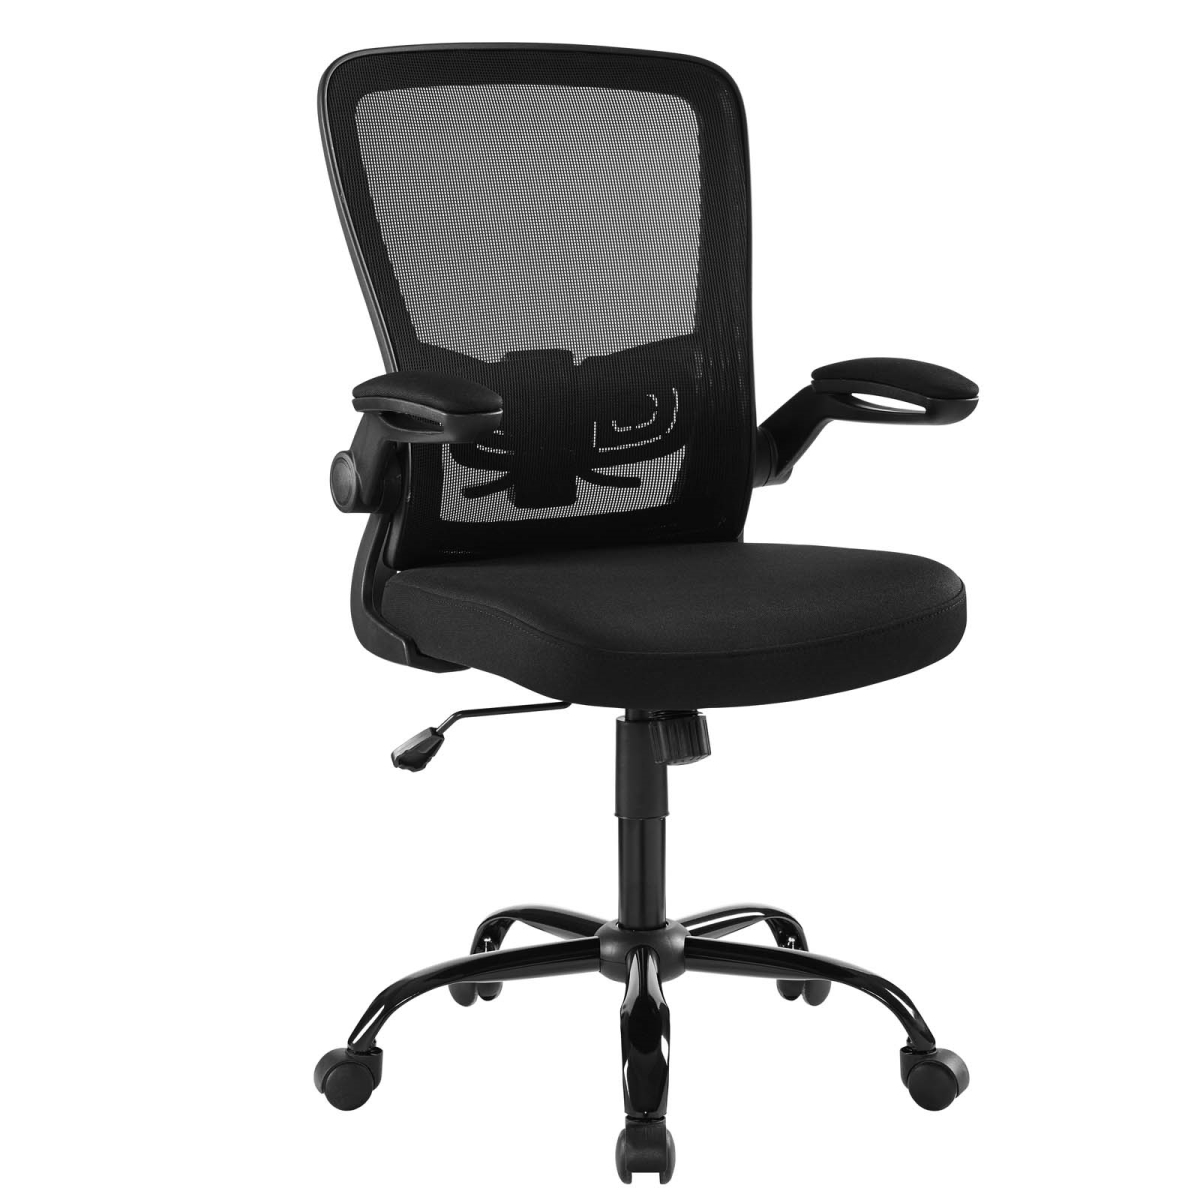 Eei-2992-blk Exceed Mesh Office Chair - Black, 39 - 42 X 23.5 X 24.5 In.